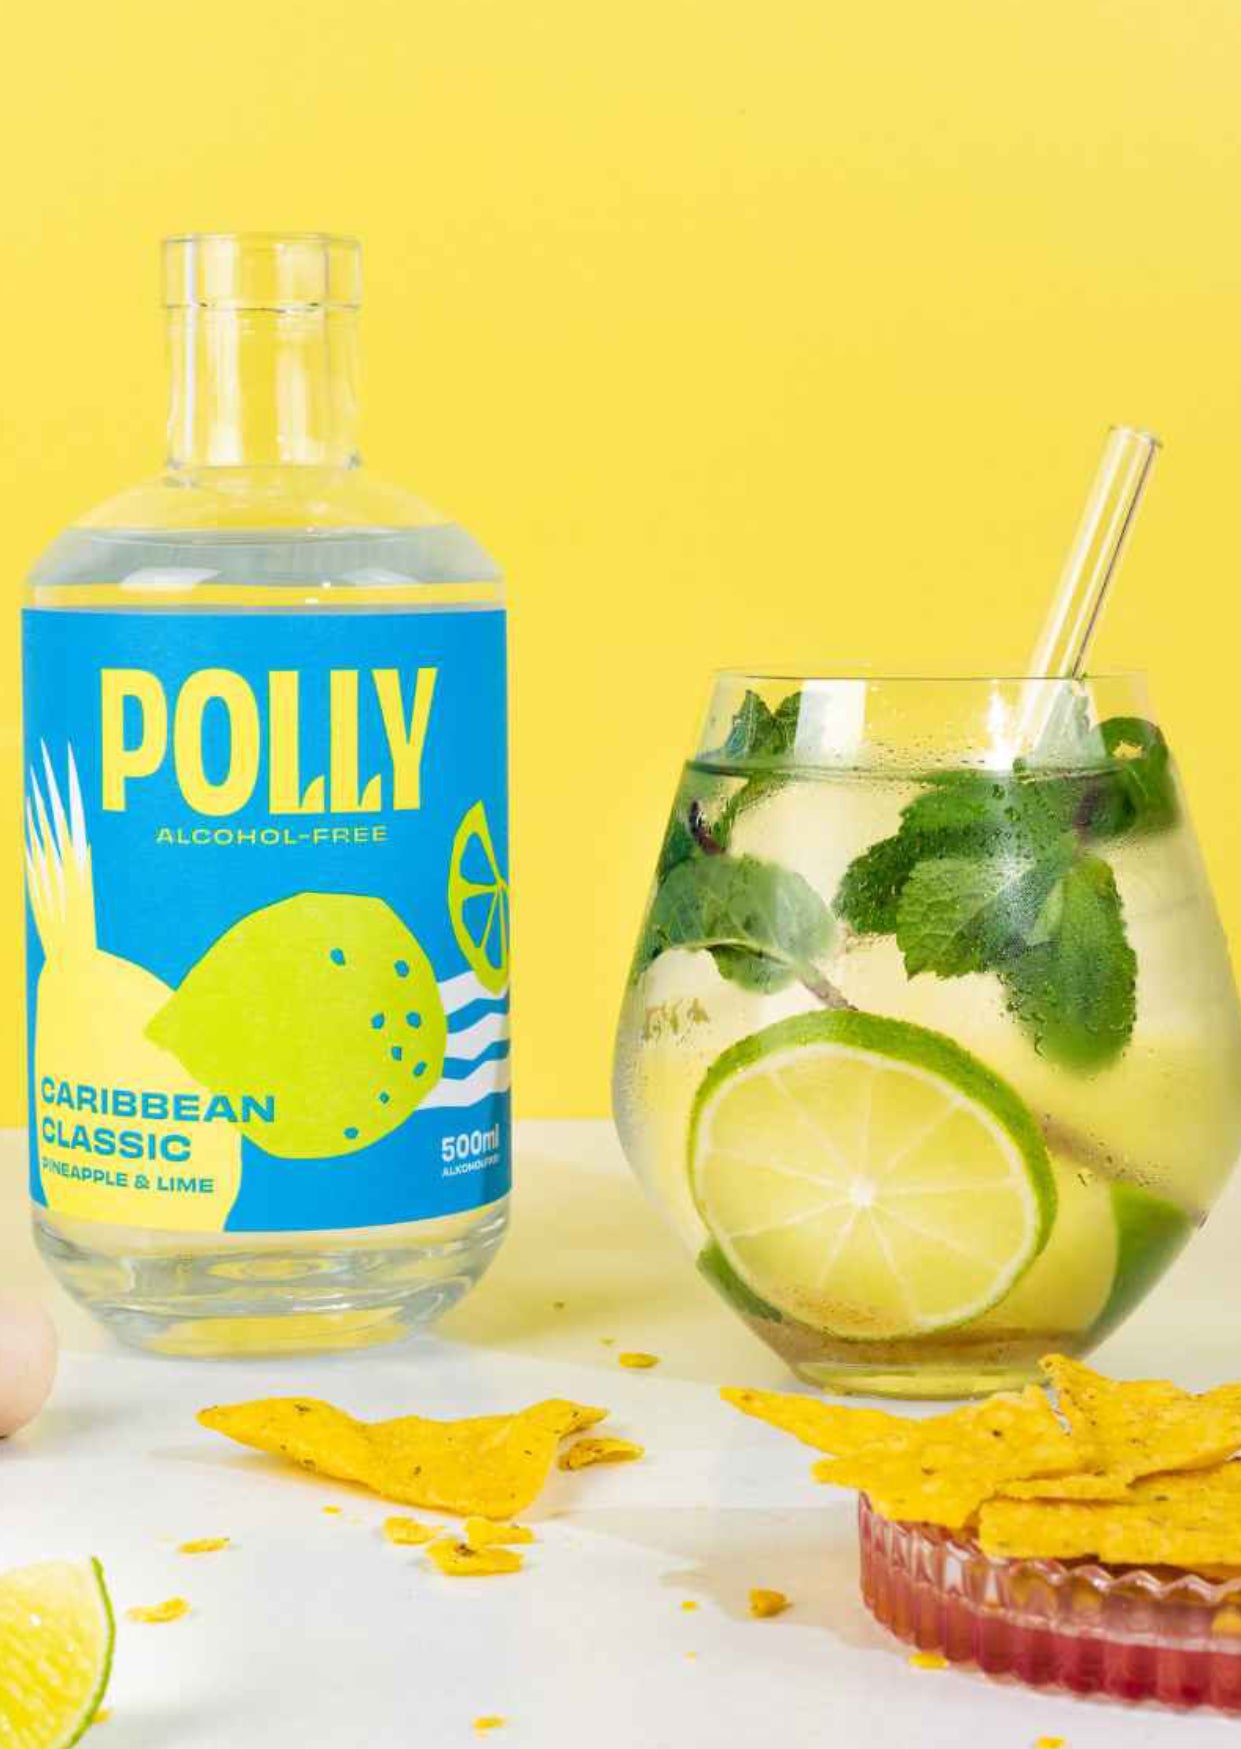 Polly Caribbean Classic Alkoholfrei 500ml